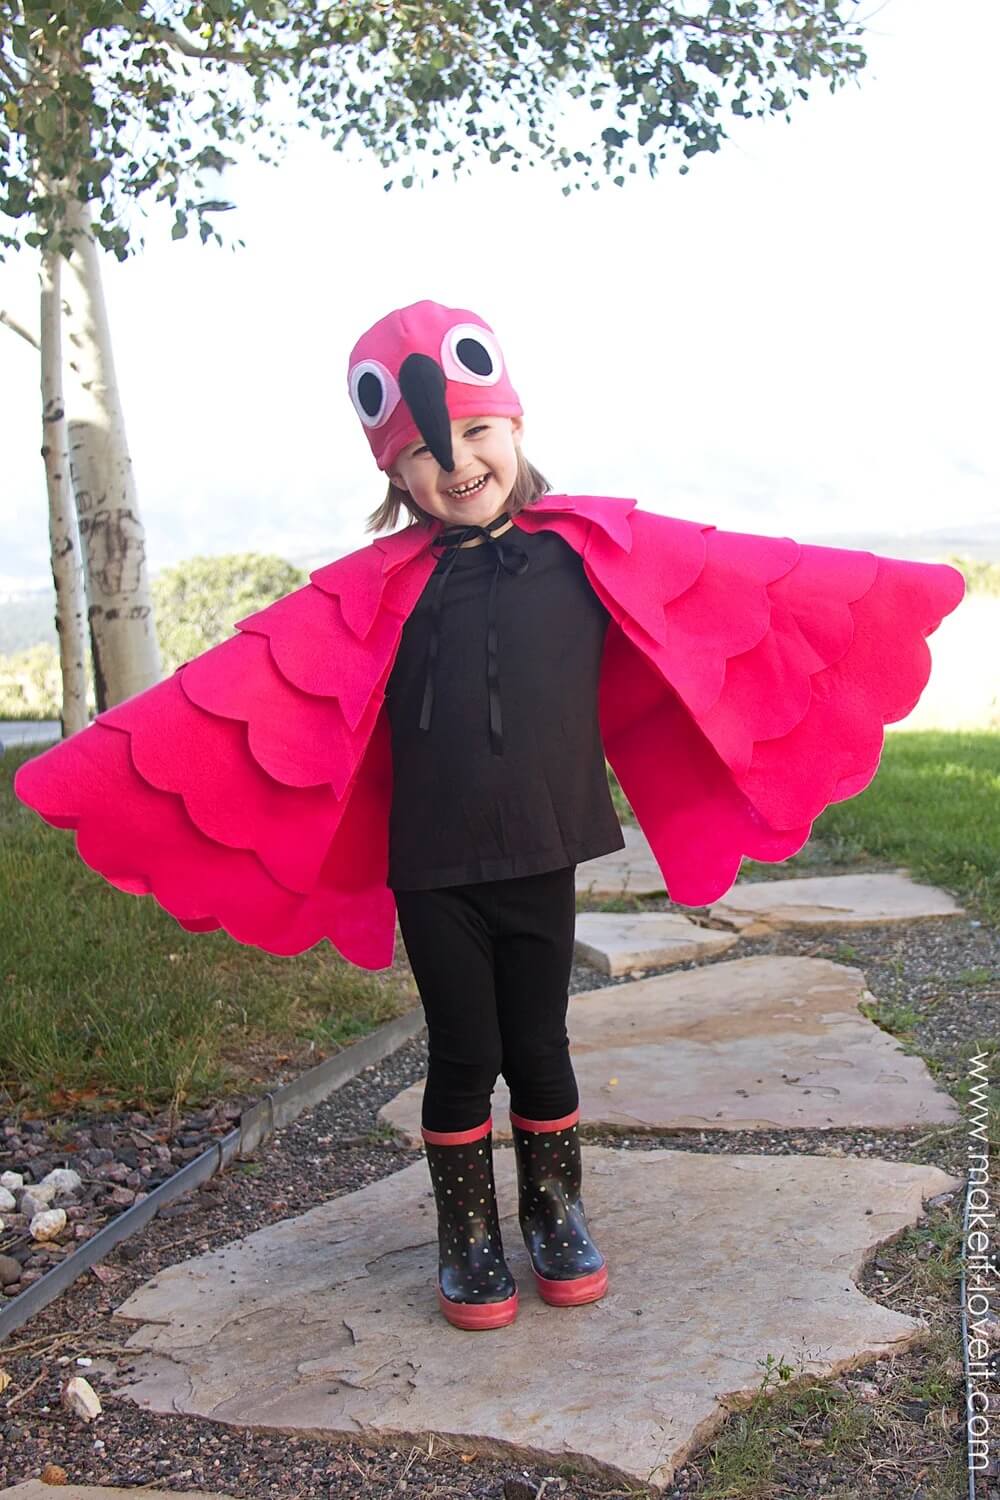 Easy To Make Flamingo Costume For Kids Flamingo Costume DIY Ideas for Kids 